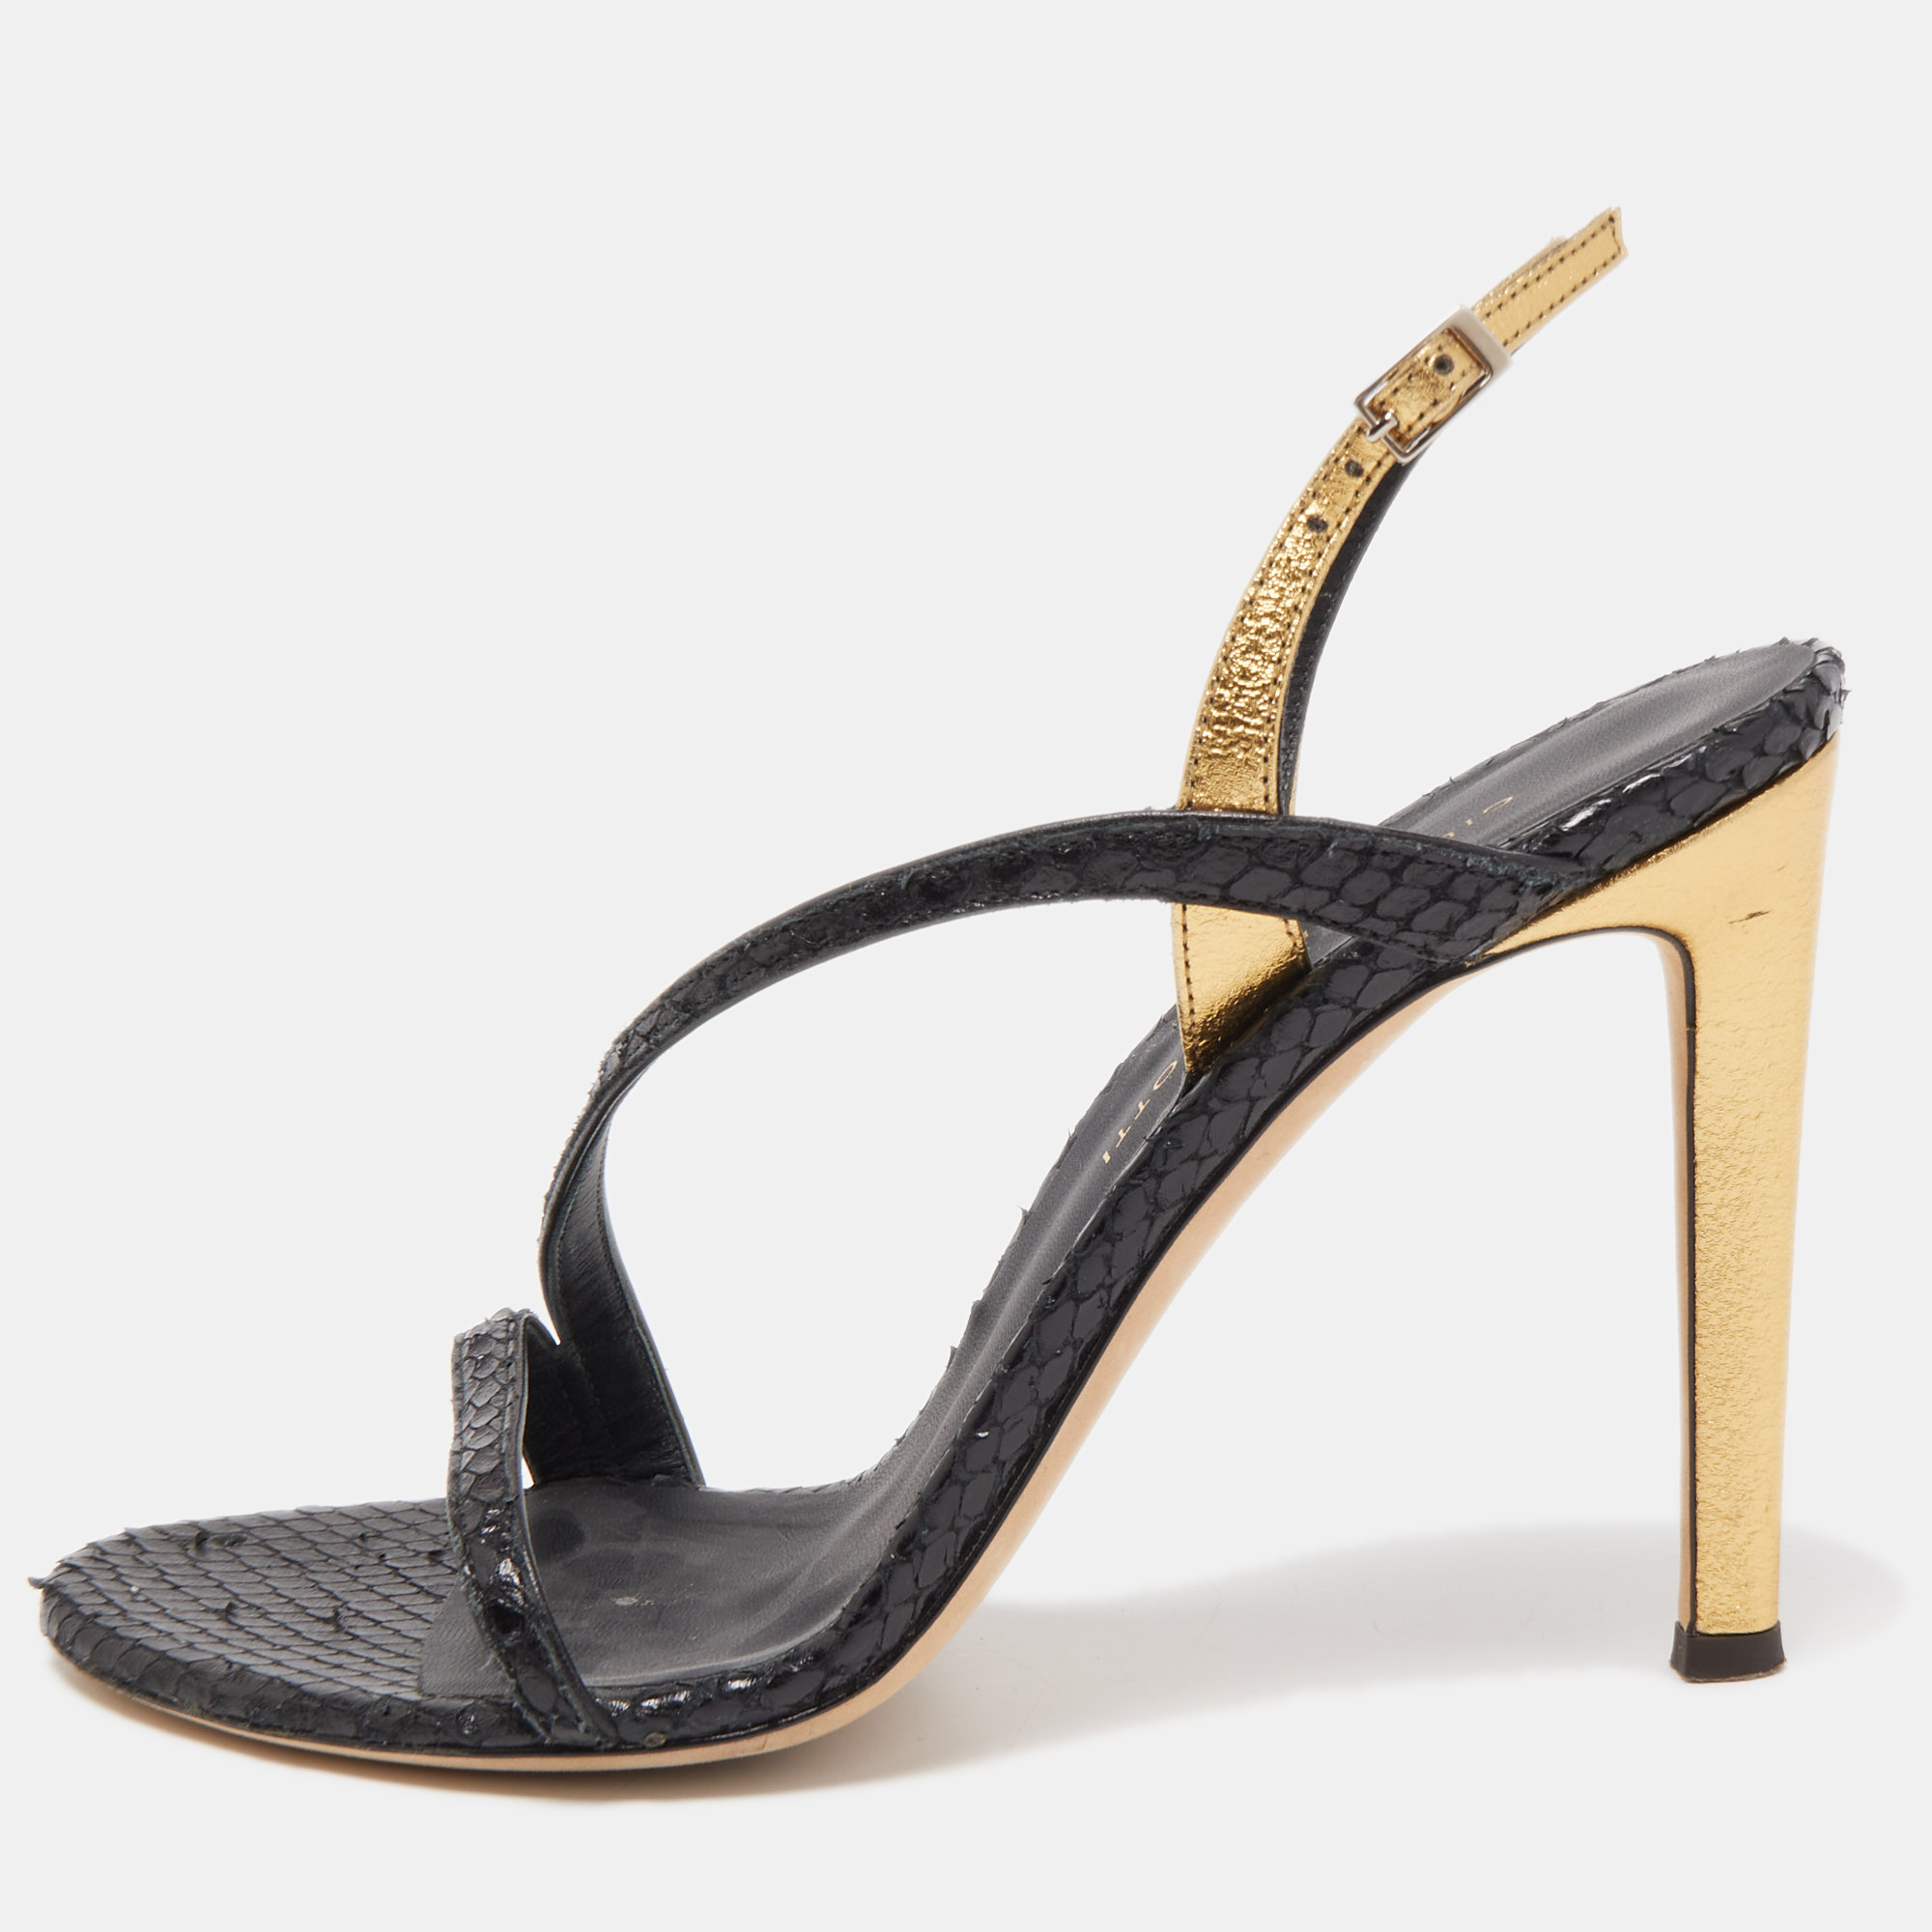 Giuseppe zanotti black/gold python embossed and leather slingback sandals size 37